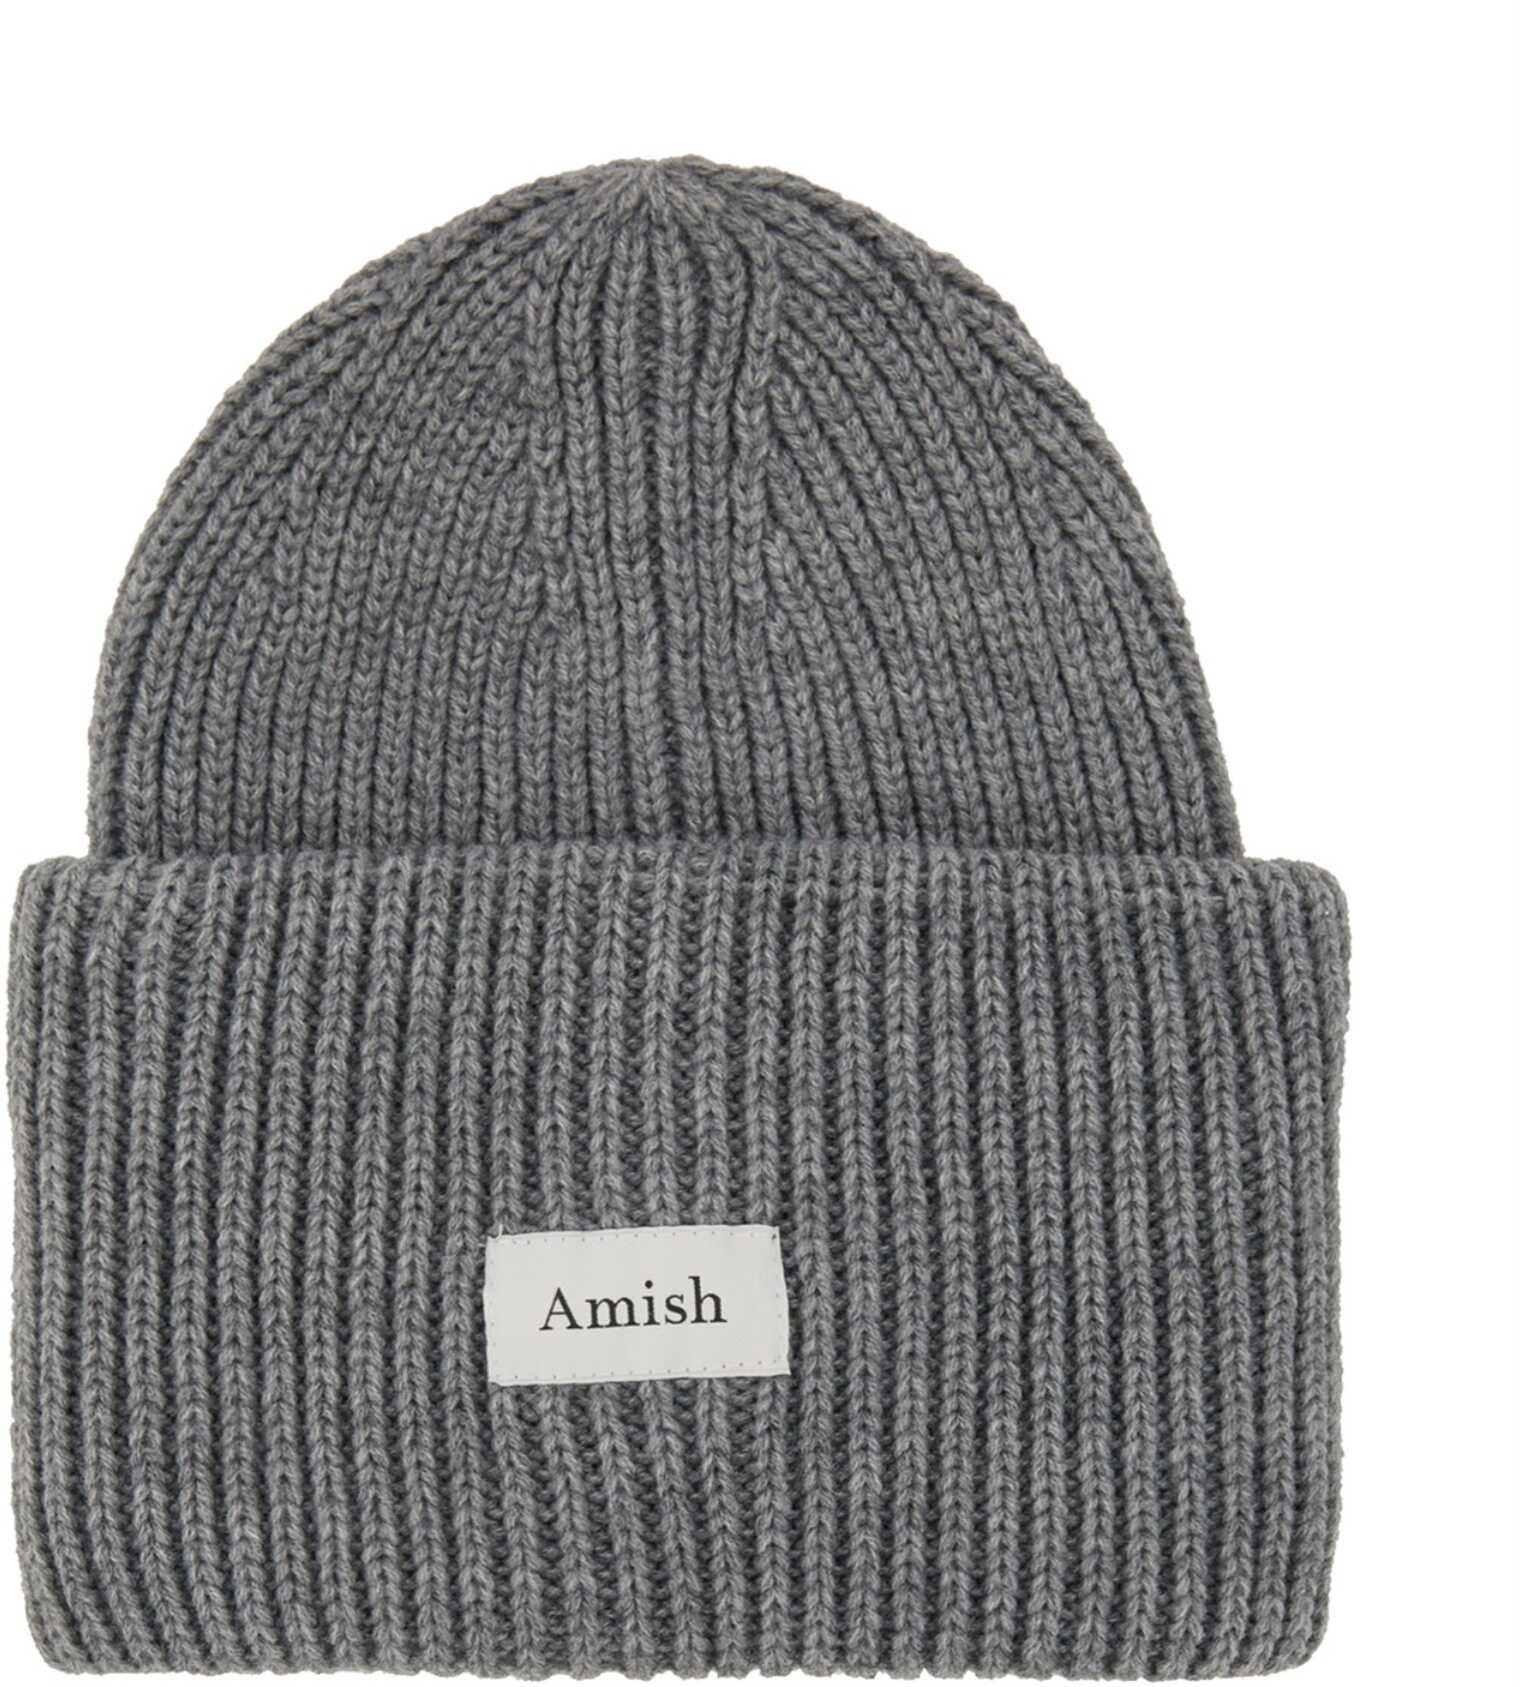 AMISH Beanie Hat With Logo GREY